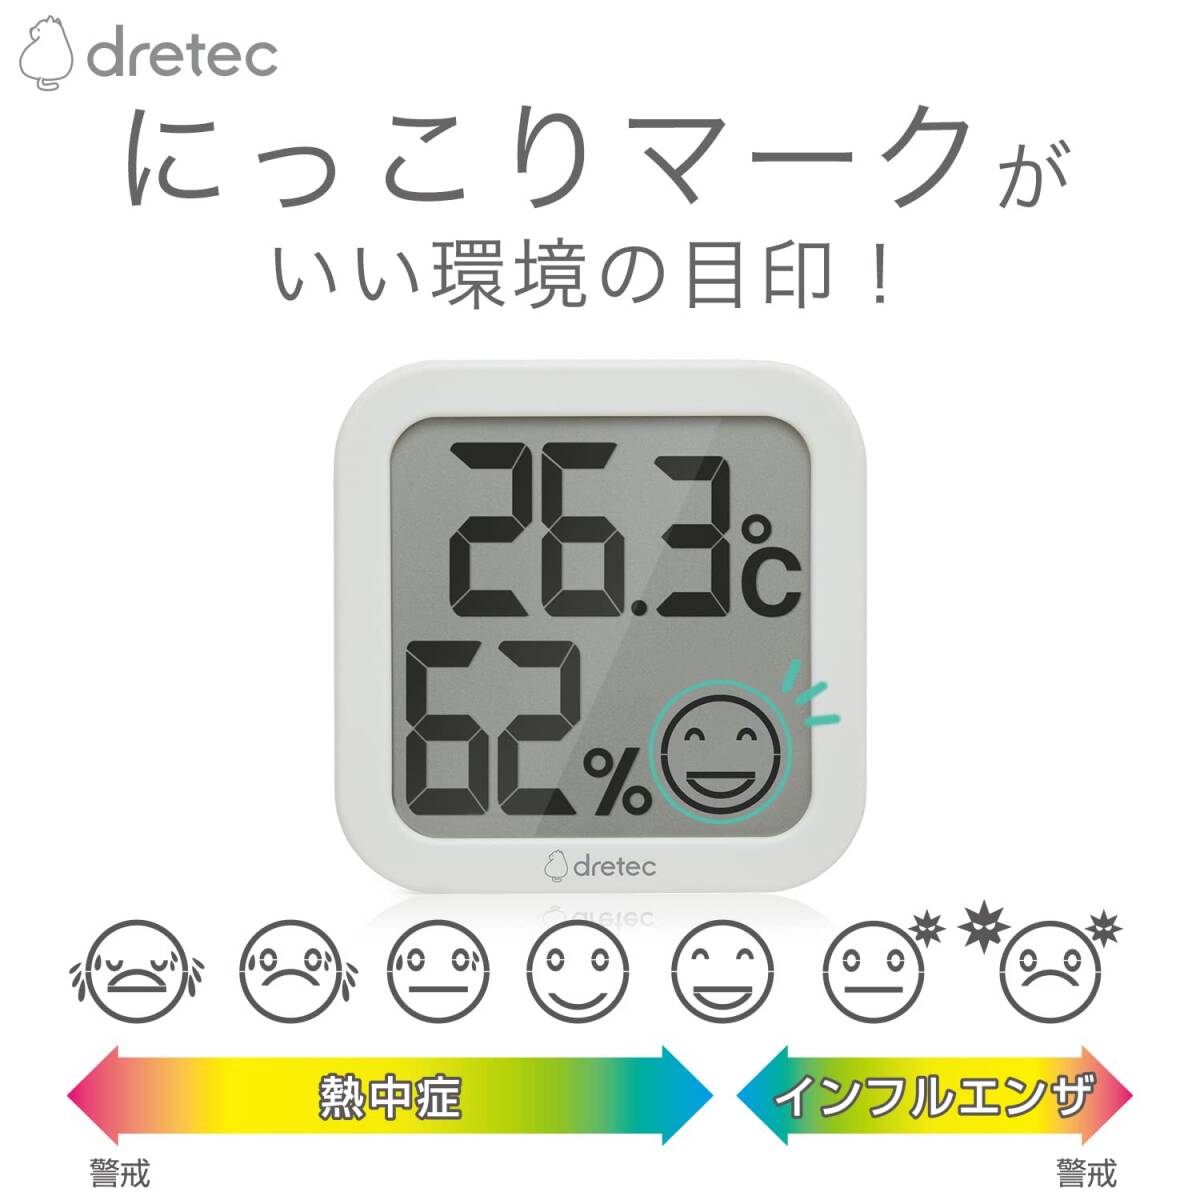 dretec(ドリテック) 温湿度計 デジタル 温度計 湿度計 大画面 コンパクト ホワイト_画像4